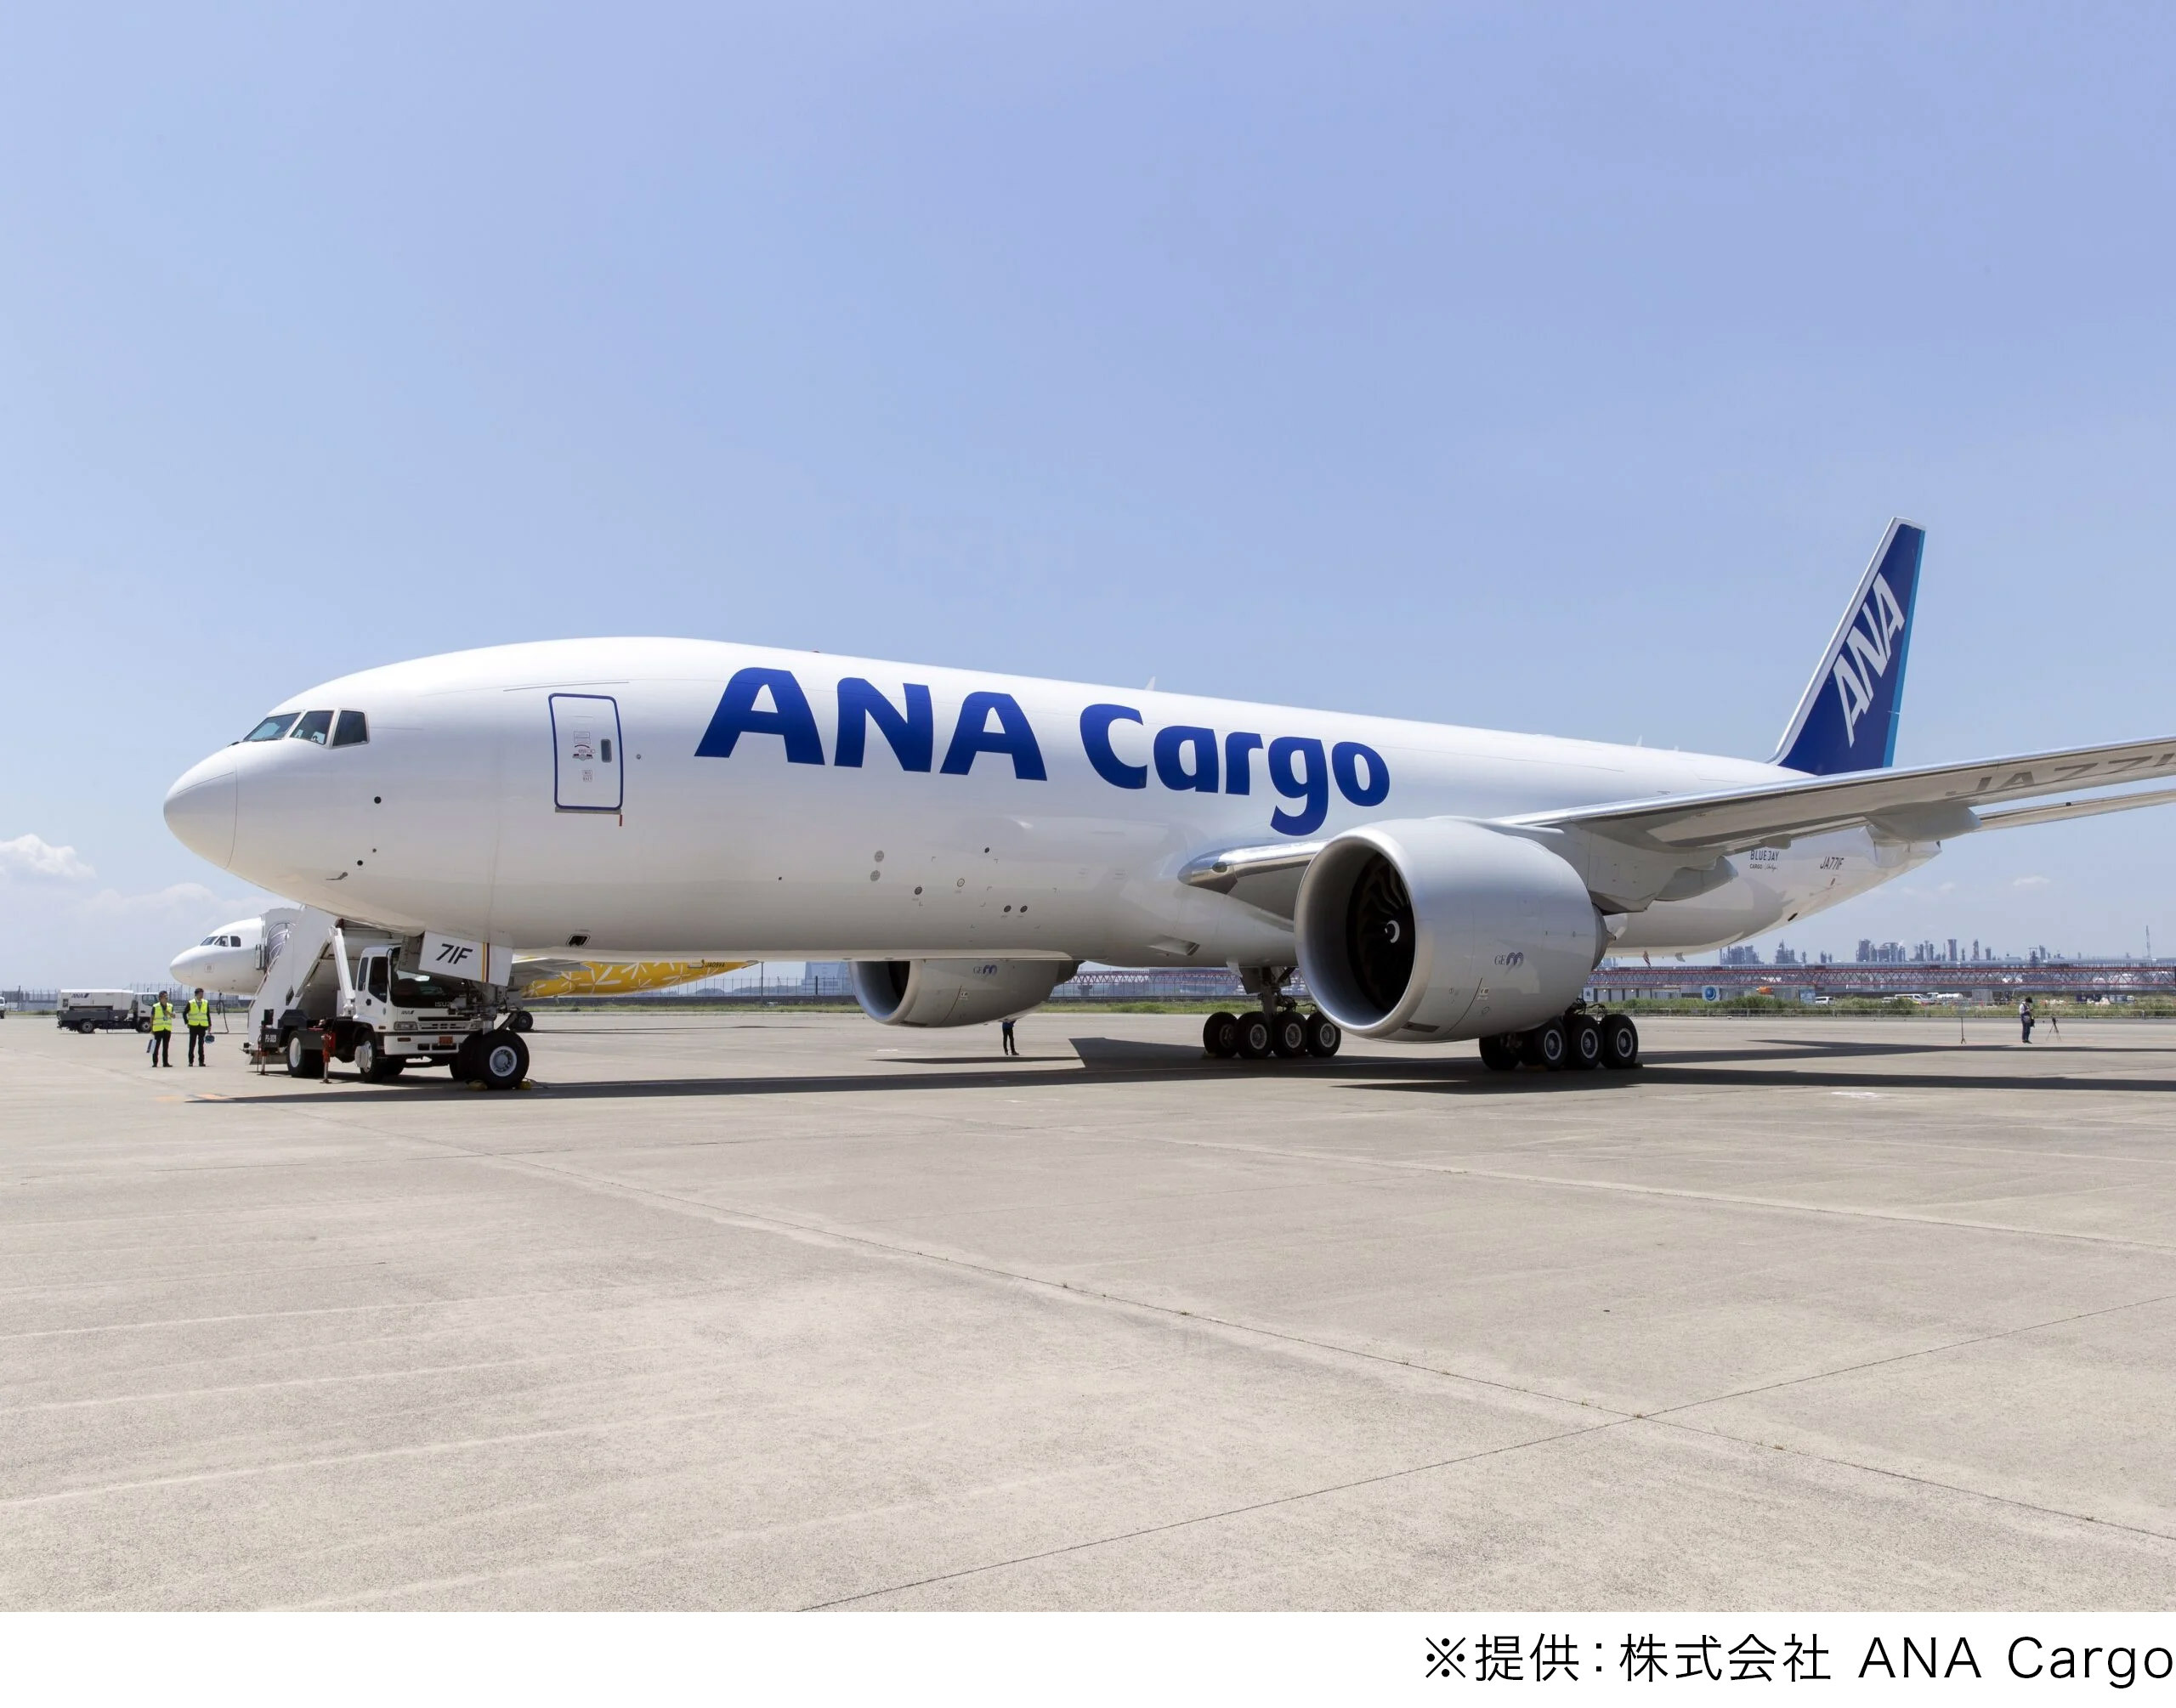 株式会社 ANA Cargo